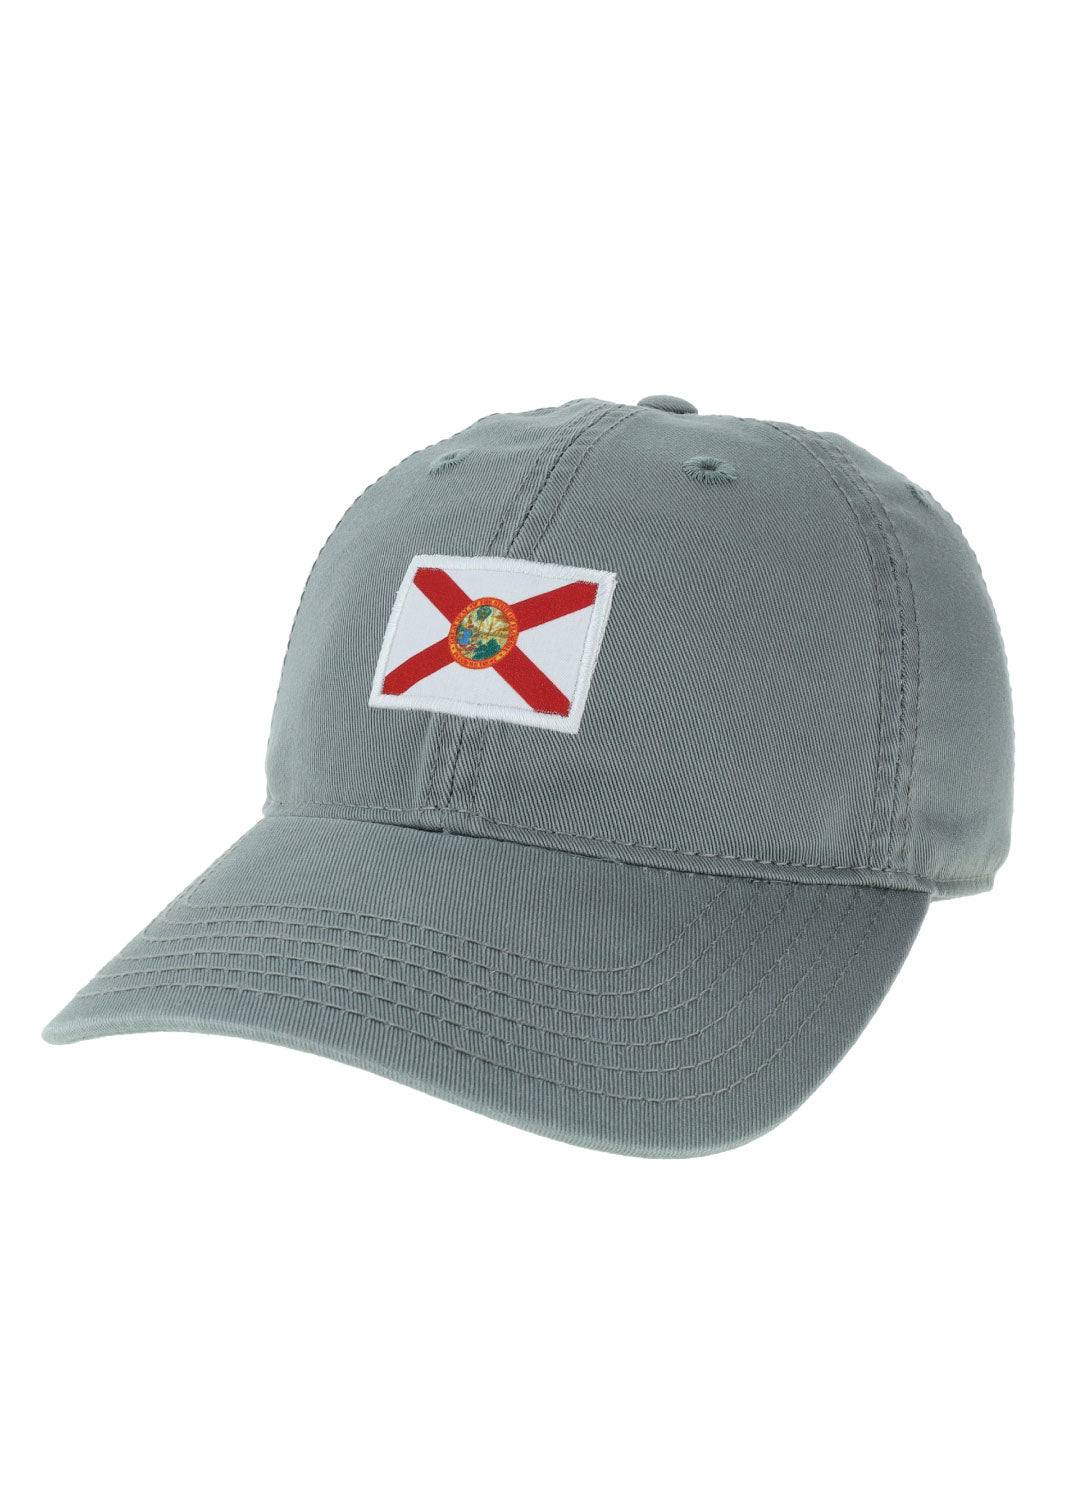 Florida Flag Hat